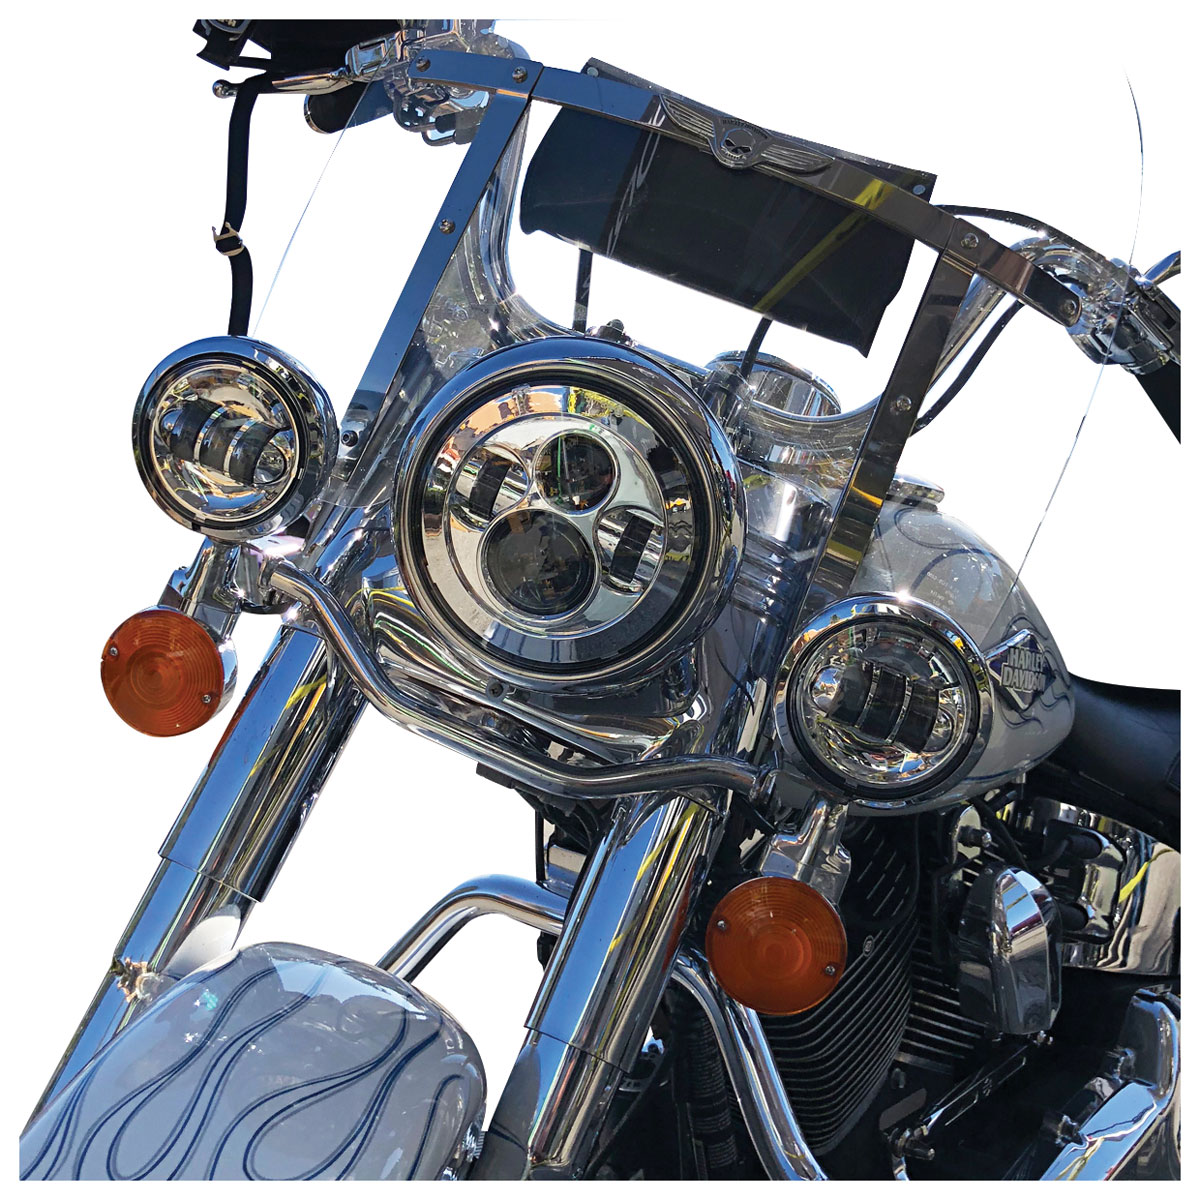 DEL Phare Antibrouillard 4,5 in complémentaire PHARES Black pour Harley Davidson